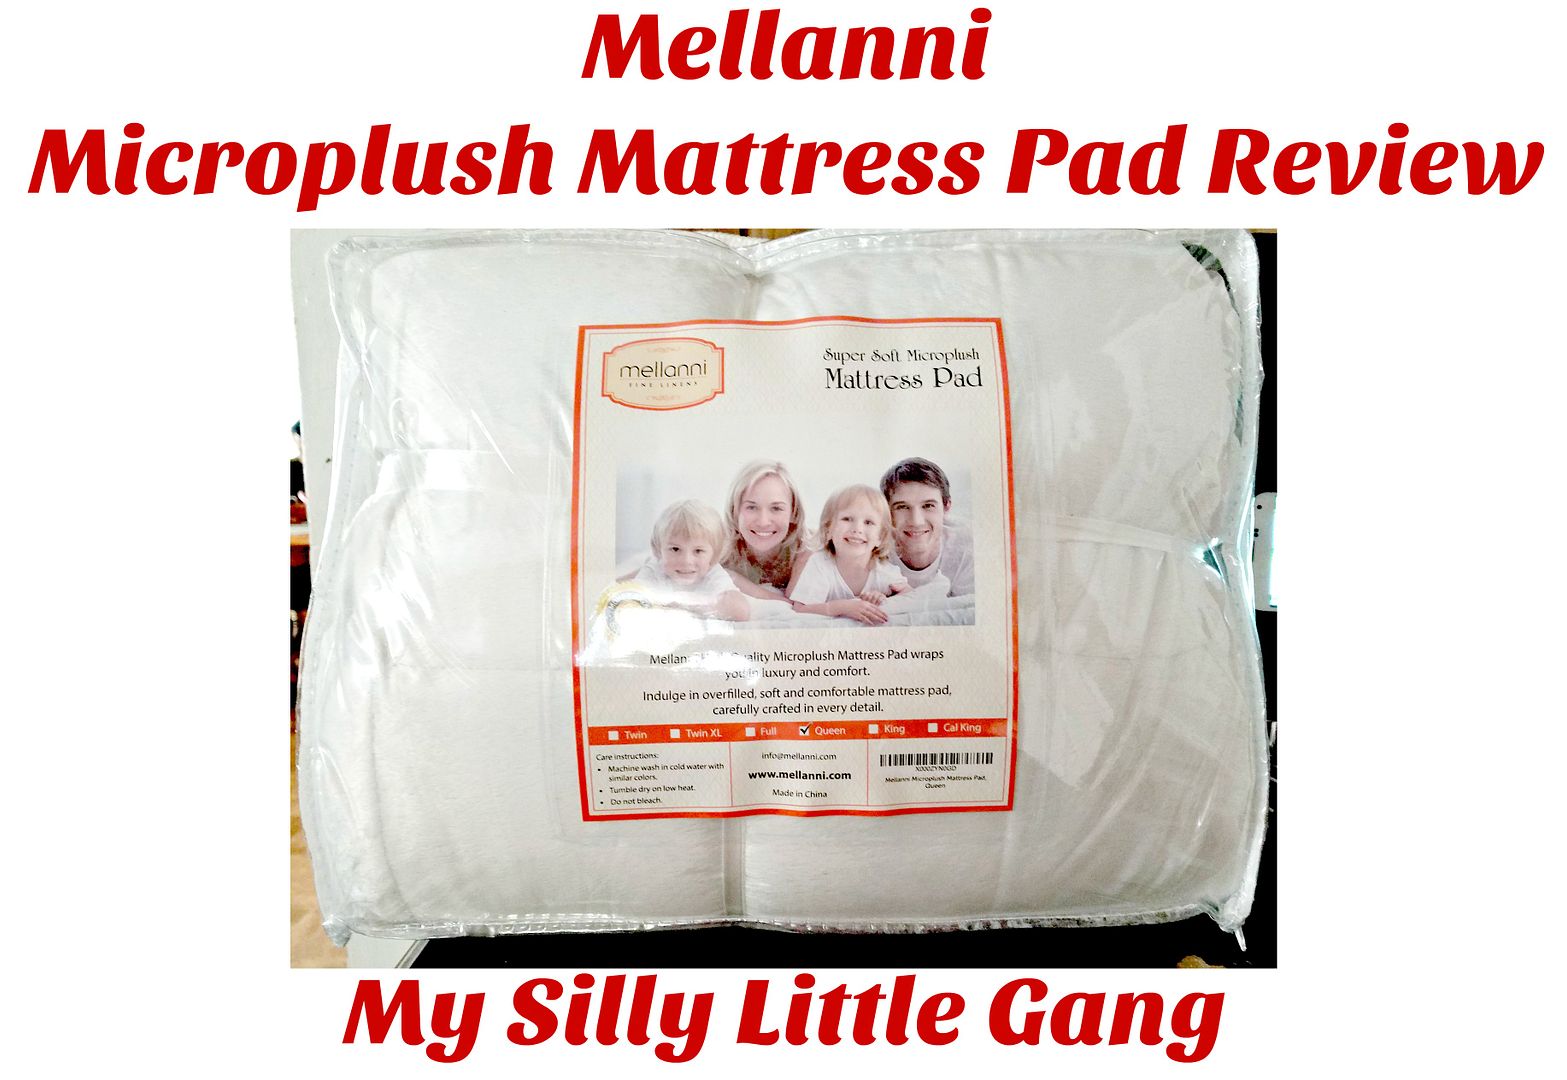 Mellanni Microplush Mattress Pad